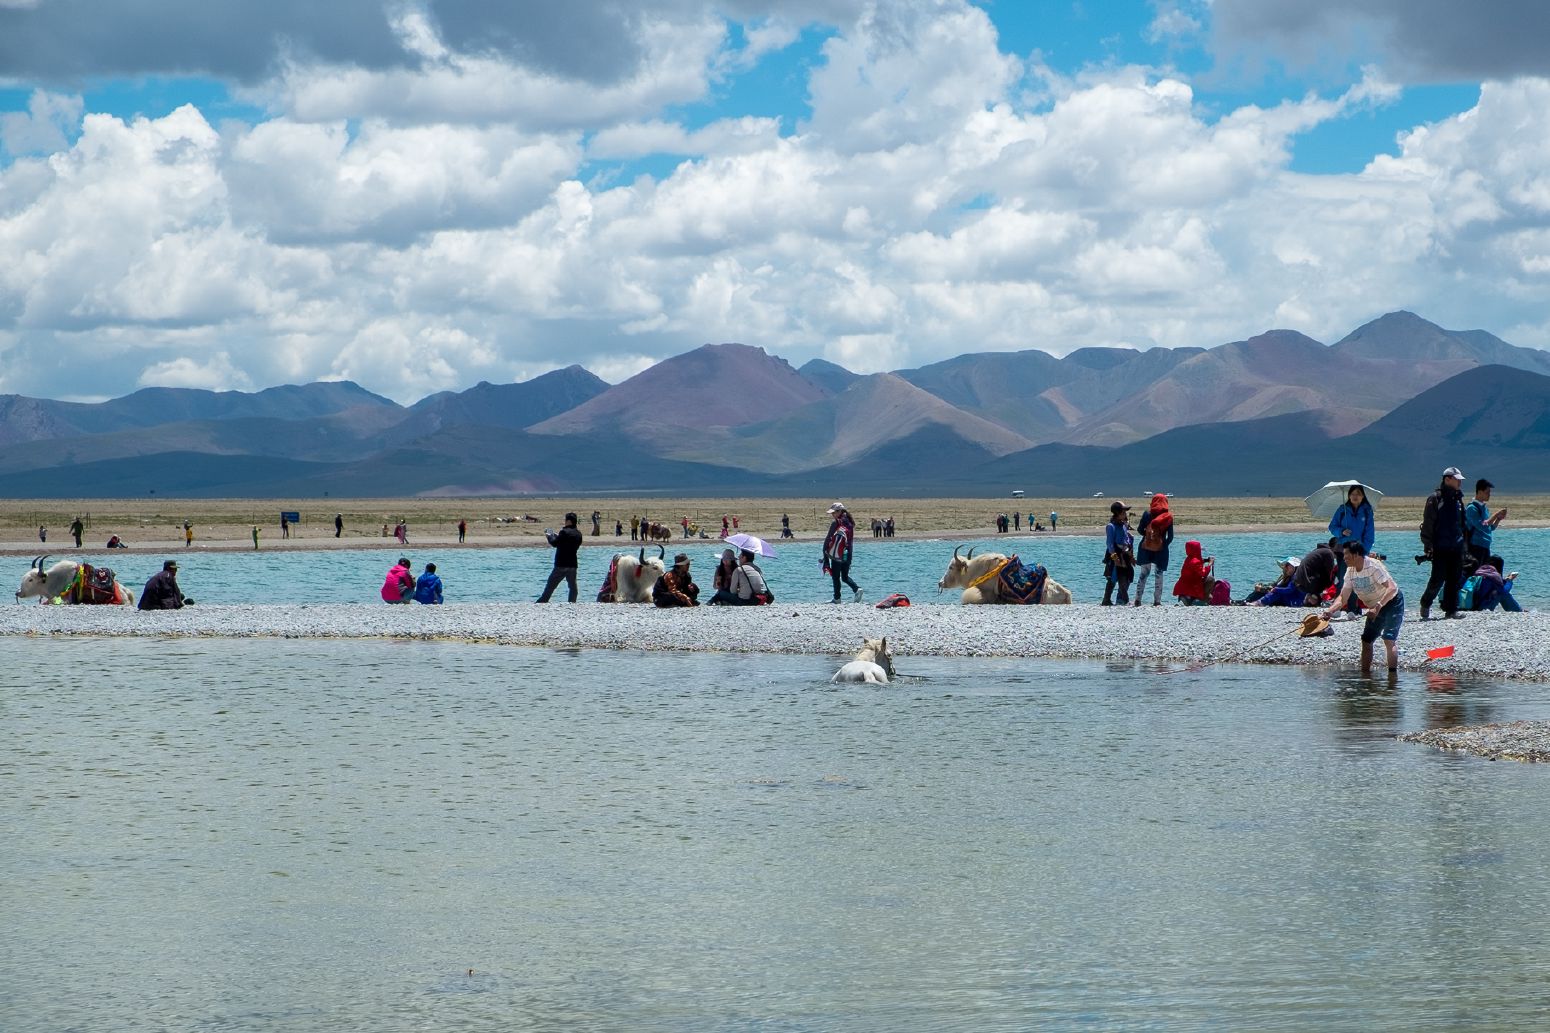 Lake Namtso. Trip to lake Namtso, Tibet, China. August 2013